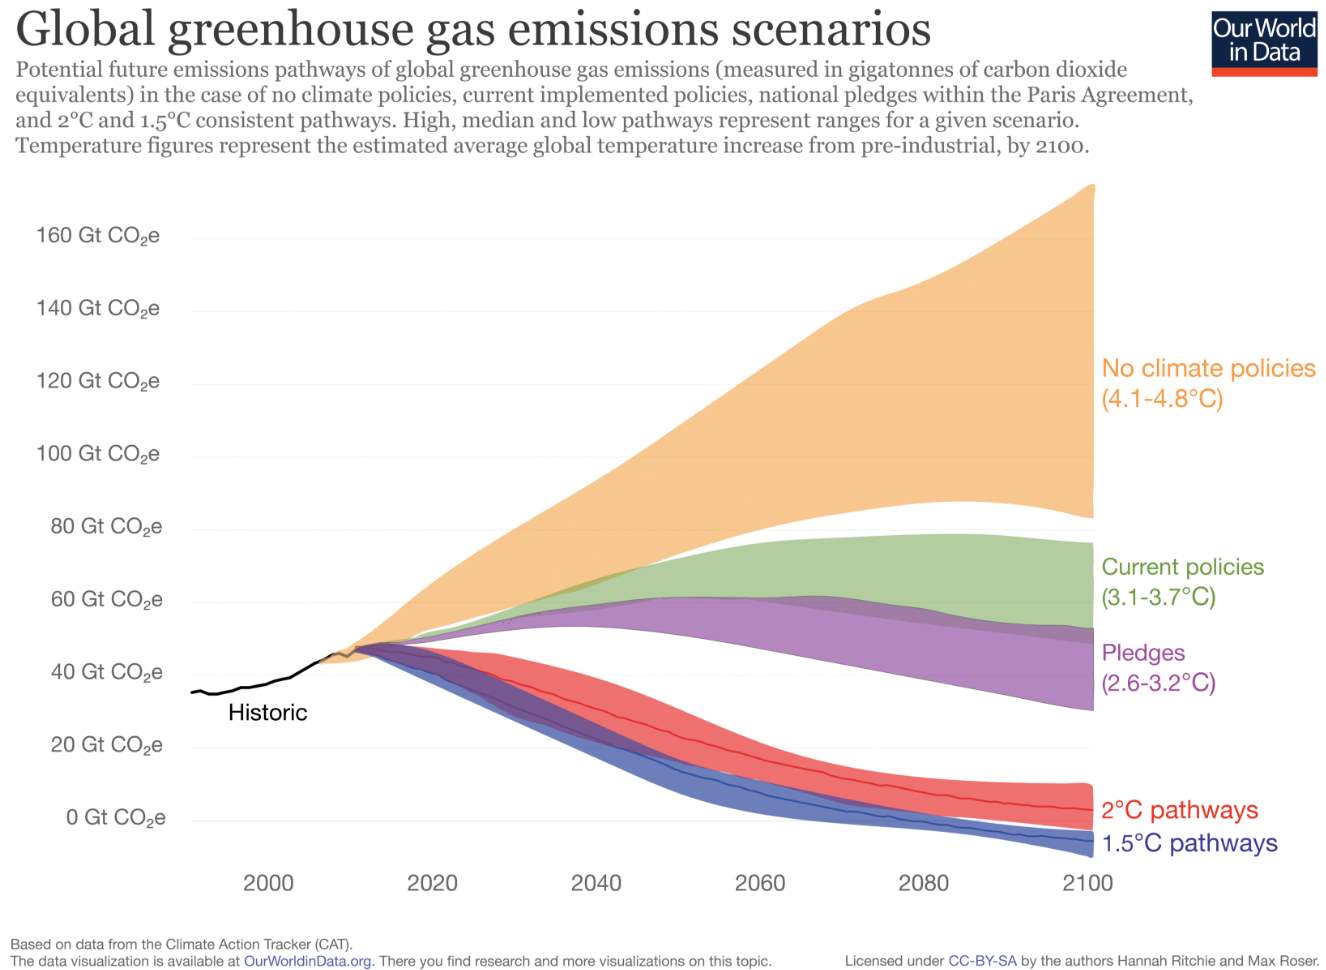 Global future greenhouse gas emission scenarios